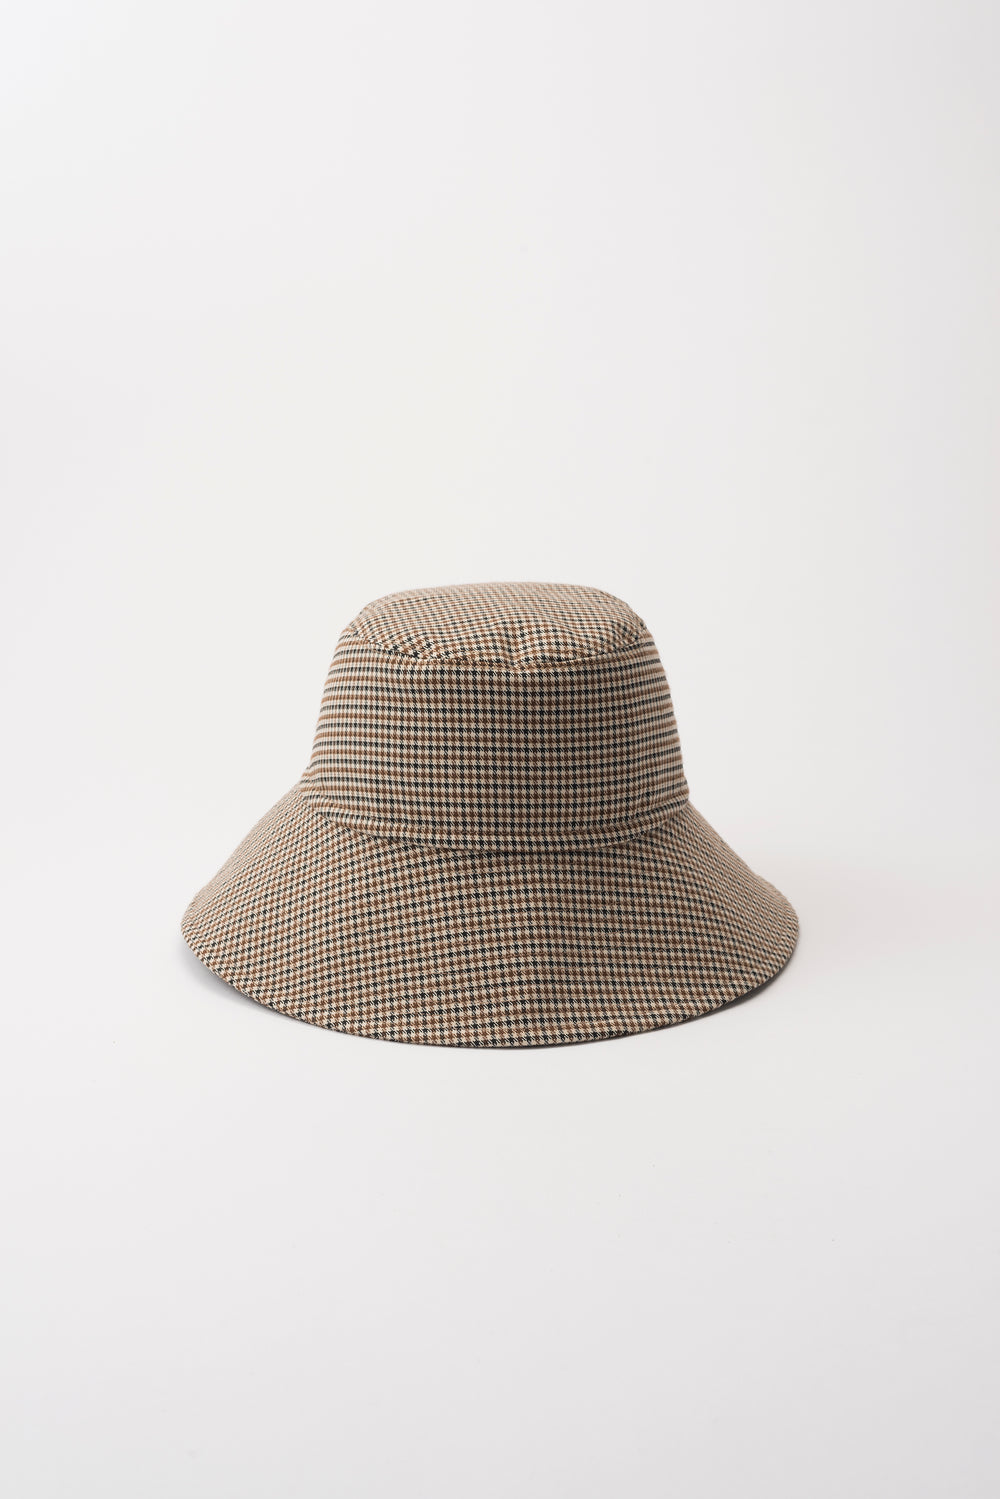 Hudson bucket hat